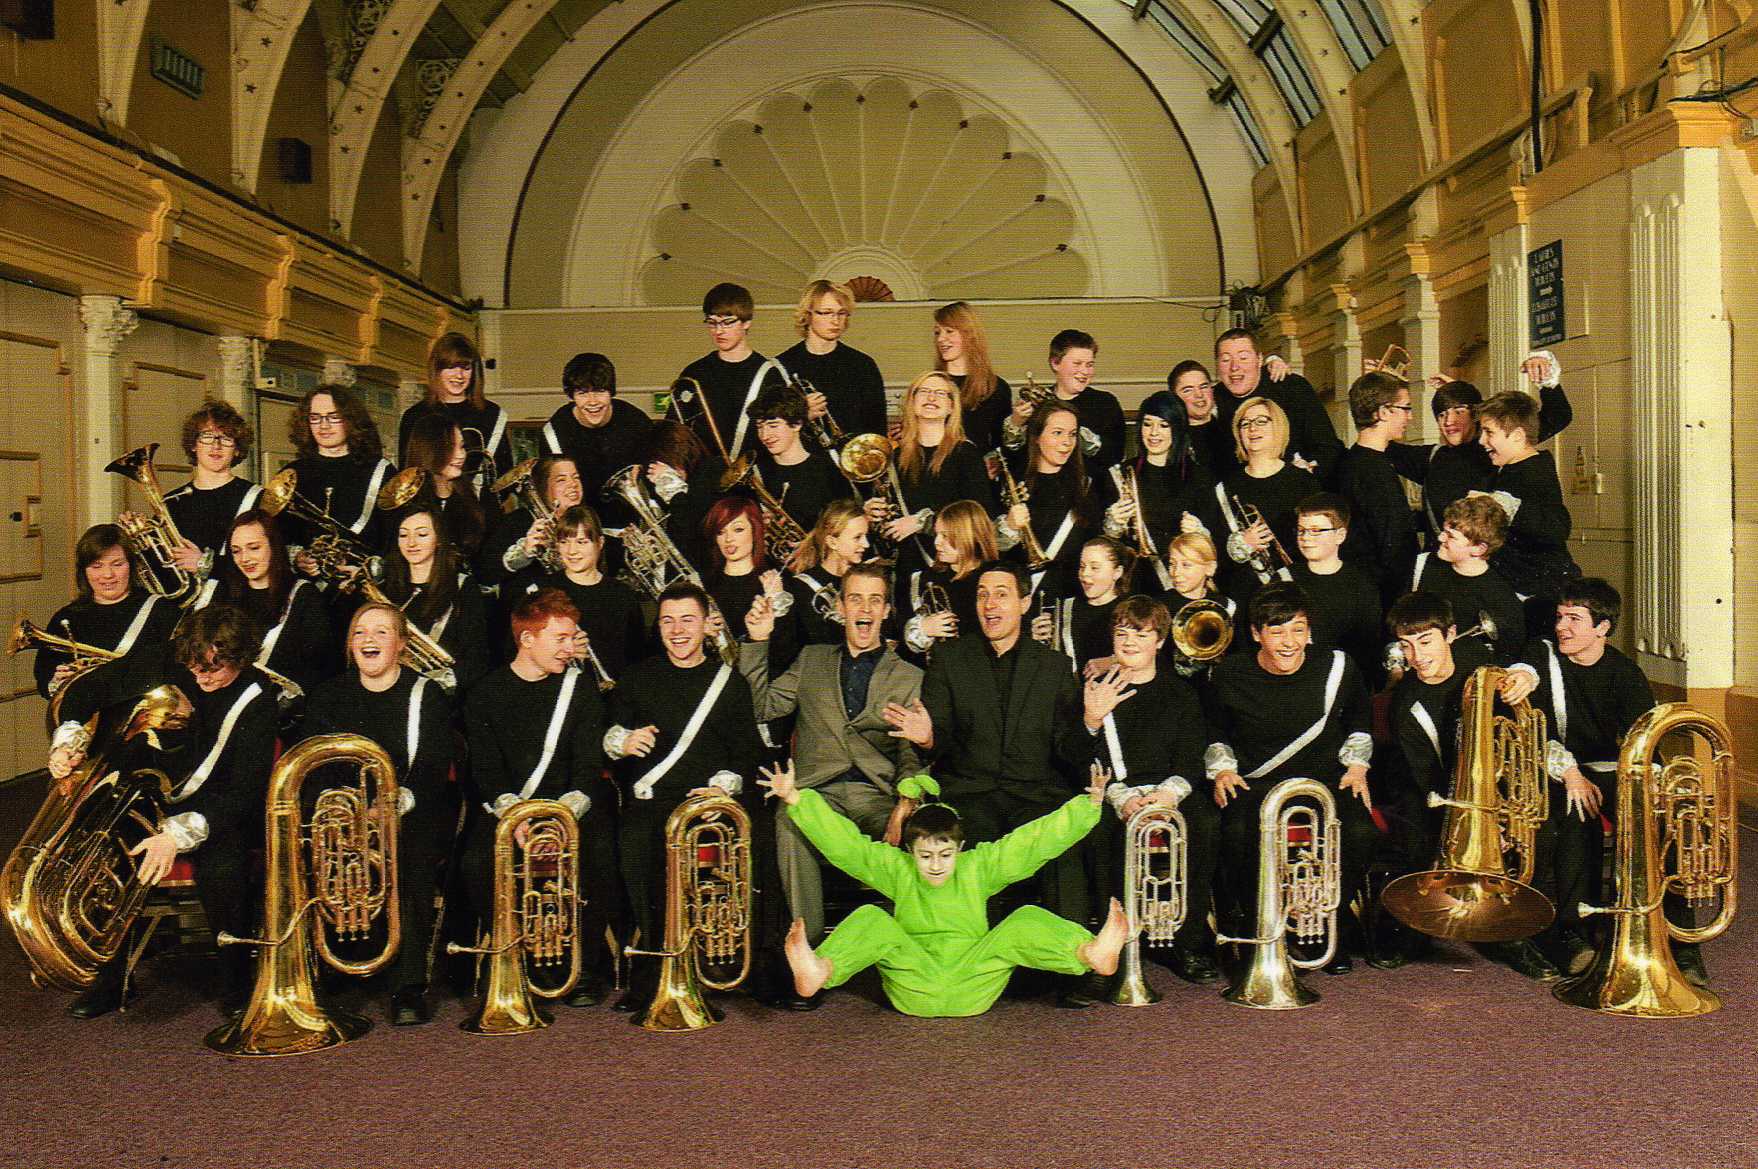 Poynton Youth Brass Band